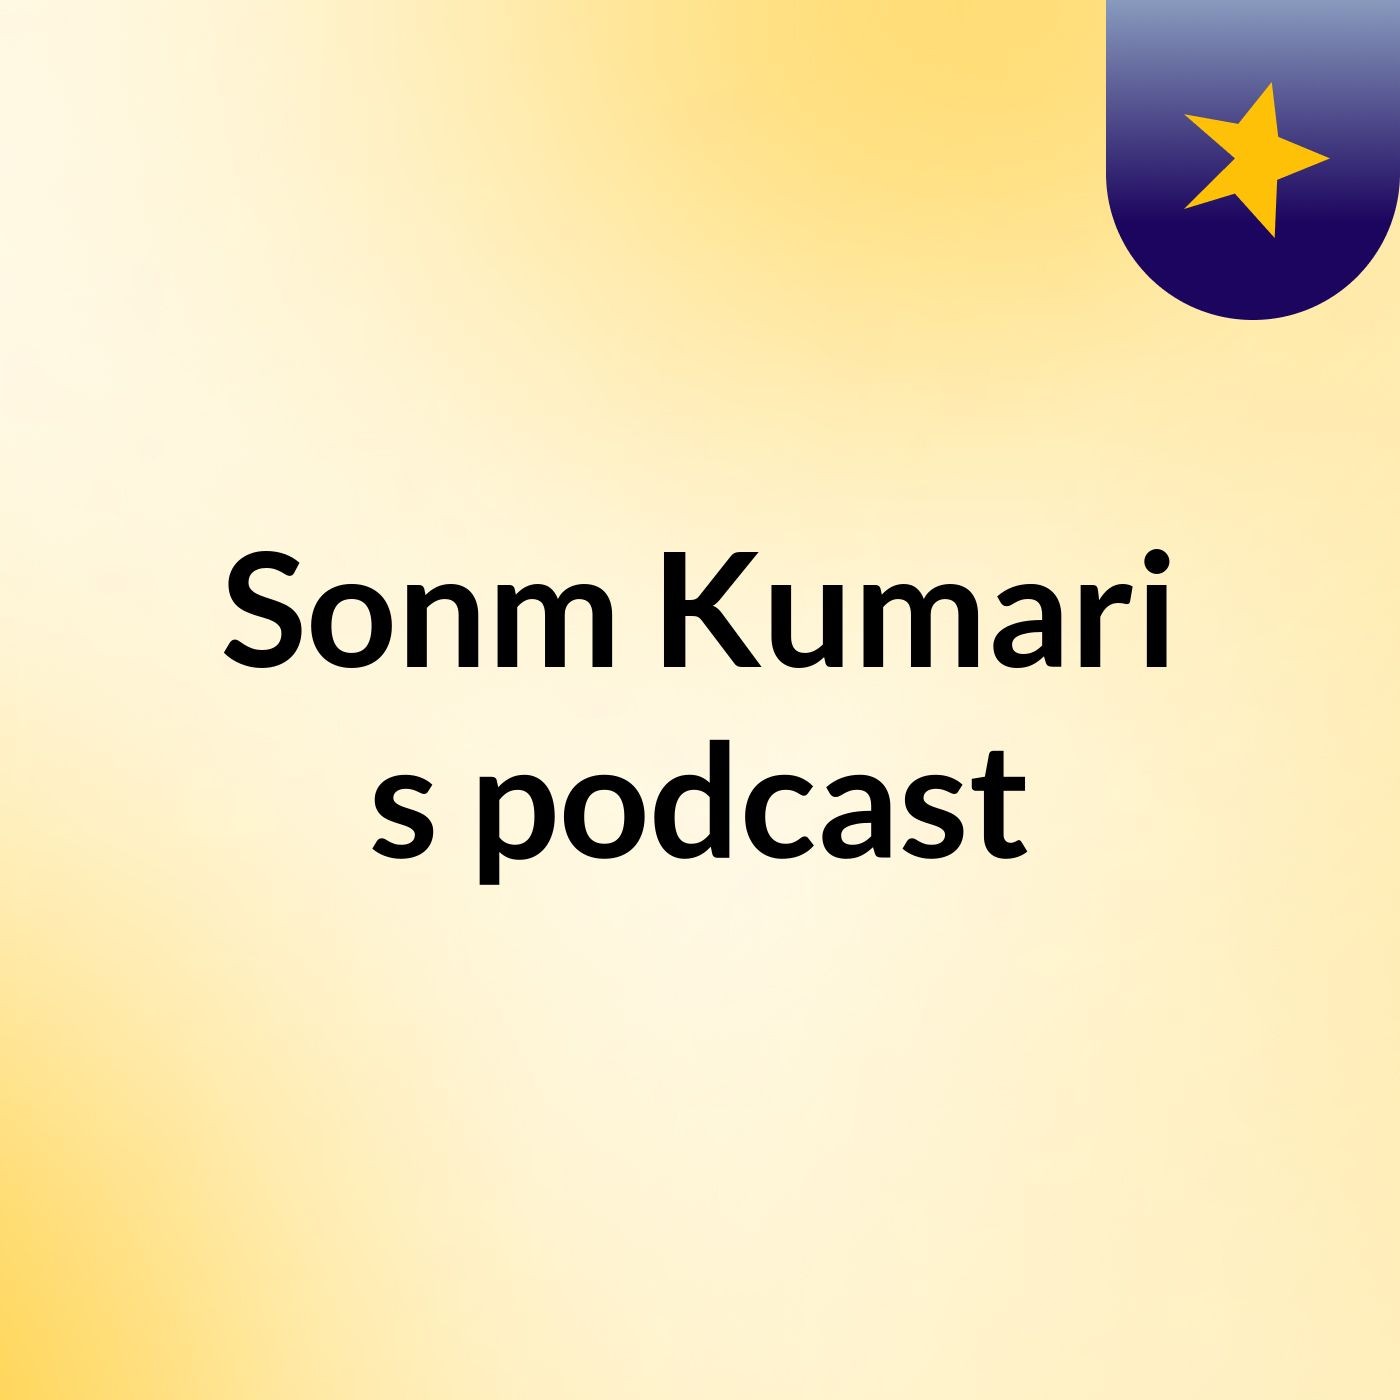 Episode 3 - Sonm Kumari's podcast